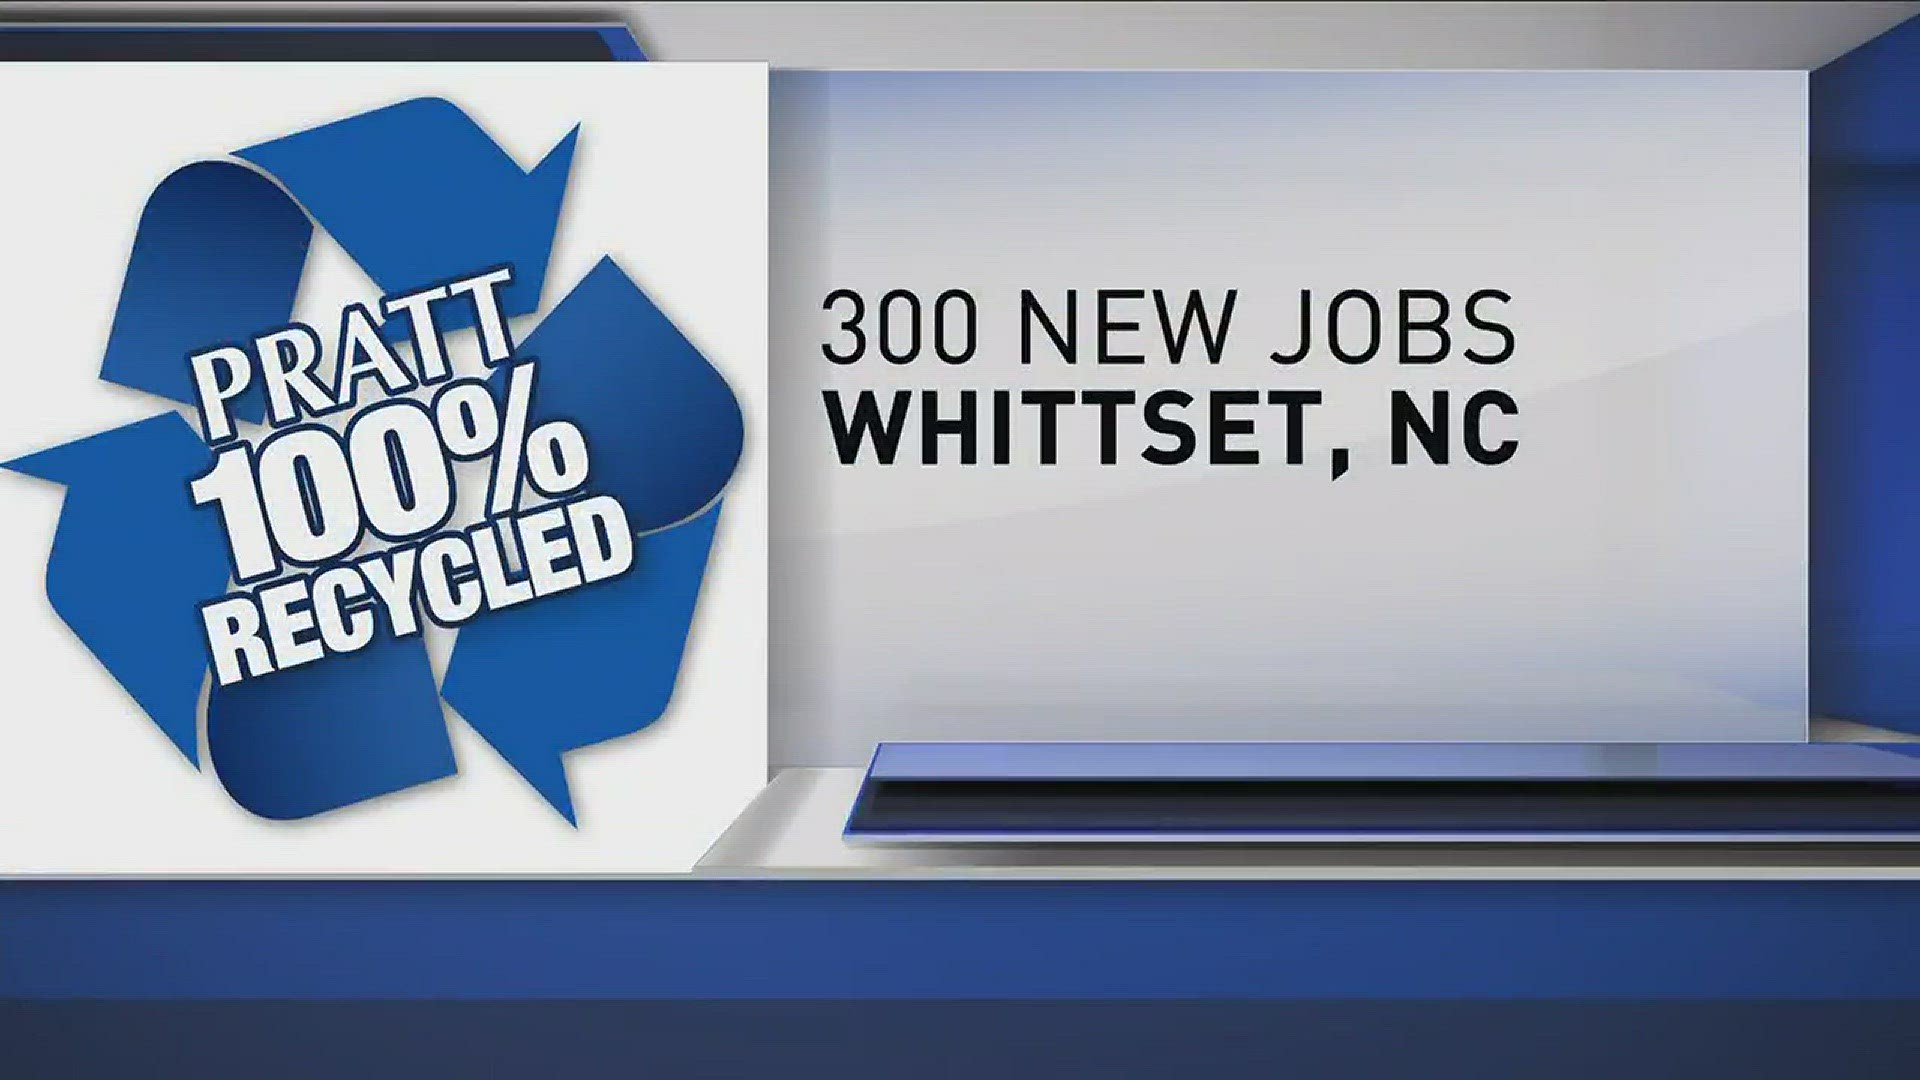 Pratt Industries Looking To Hire 300 Workers In Whitsett